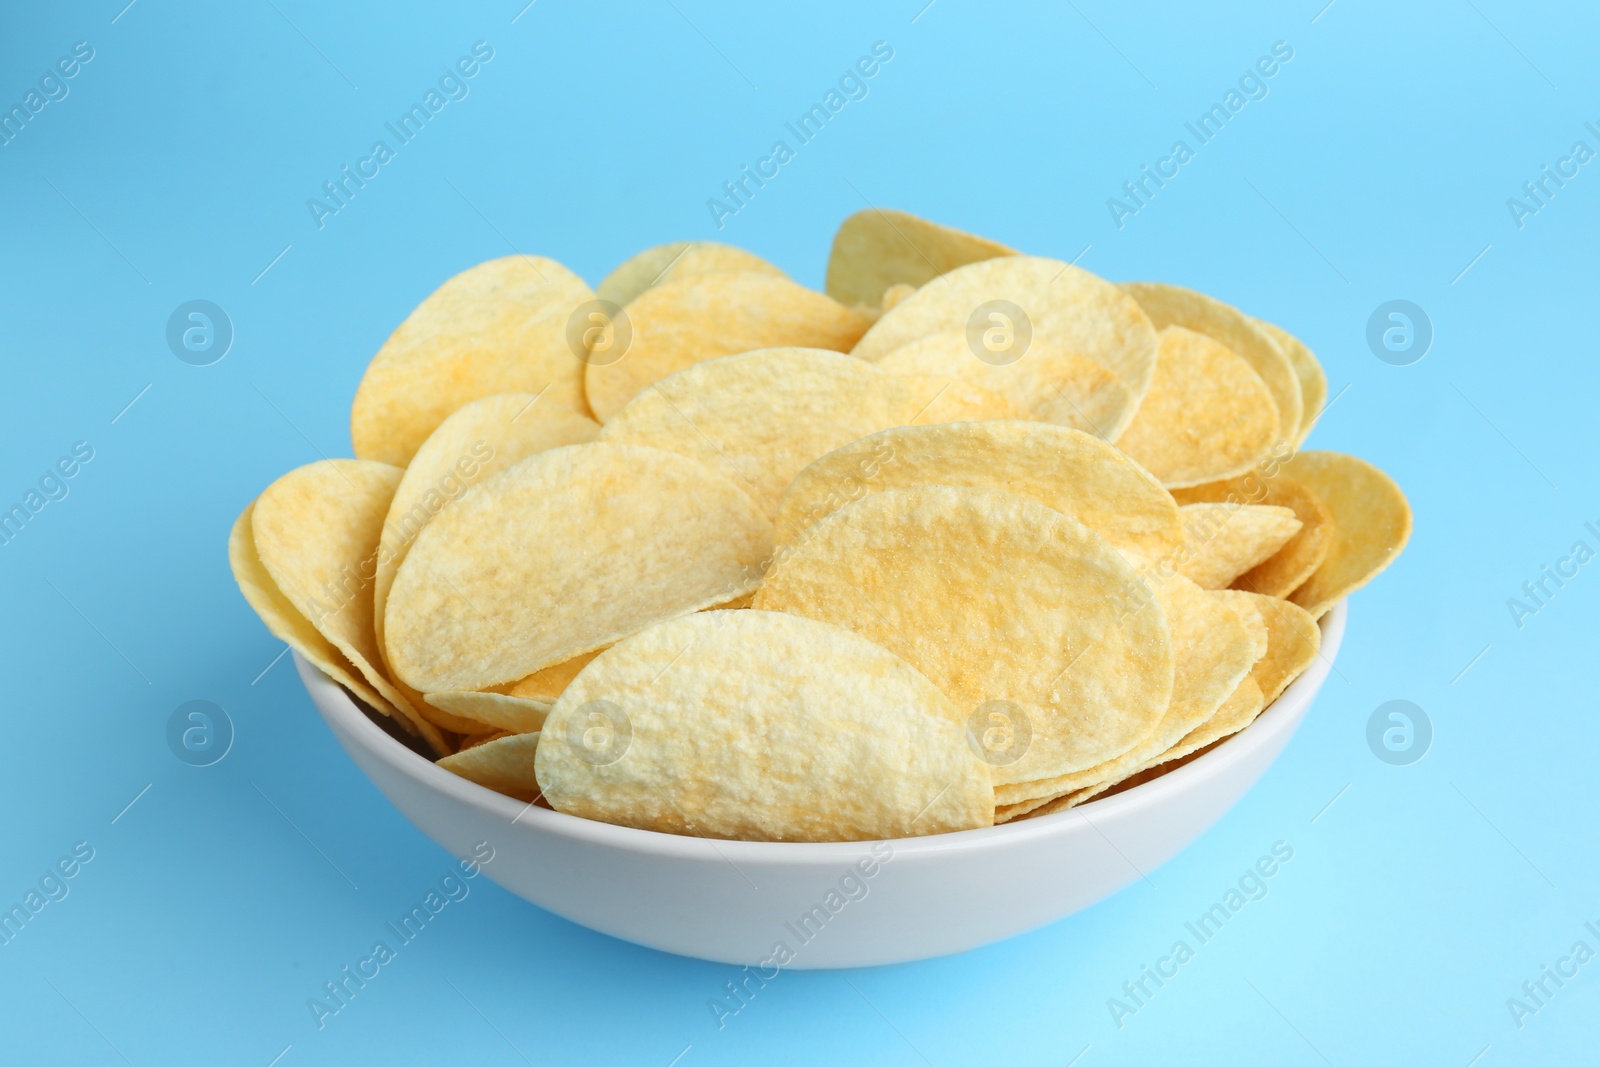 Photo of Bowl of tasty potato chips on light blue background